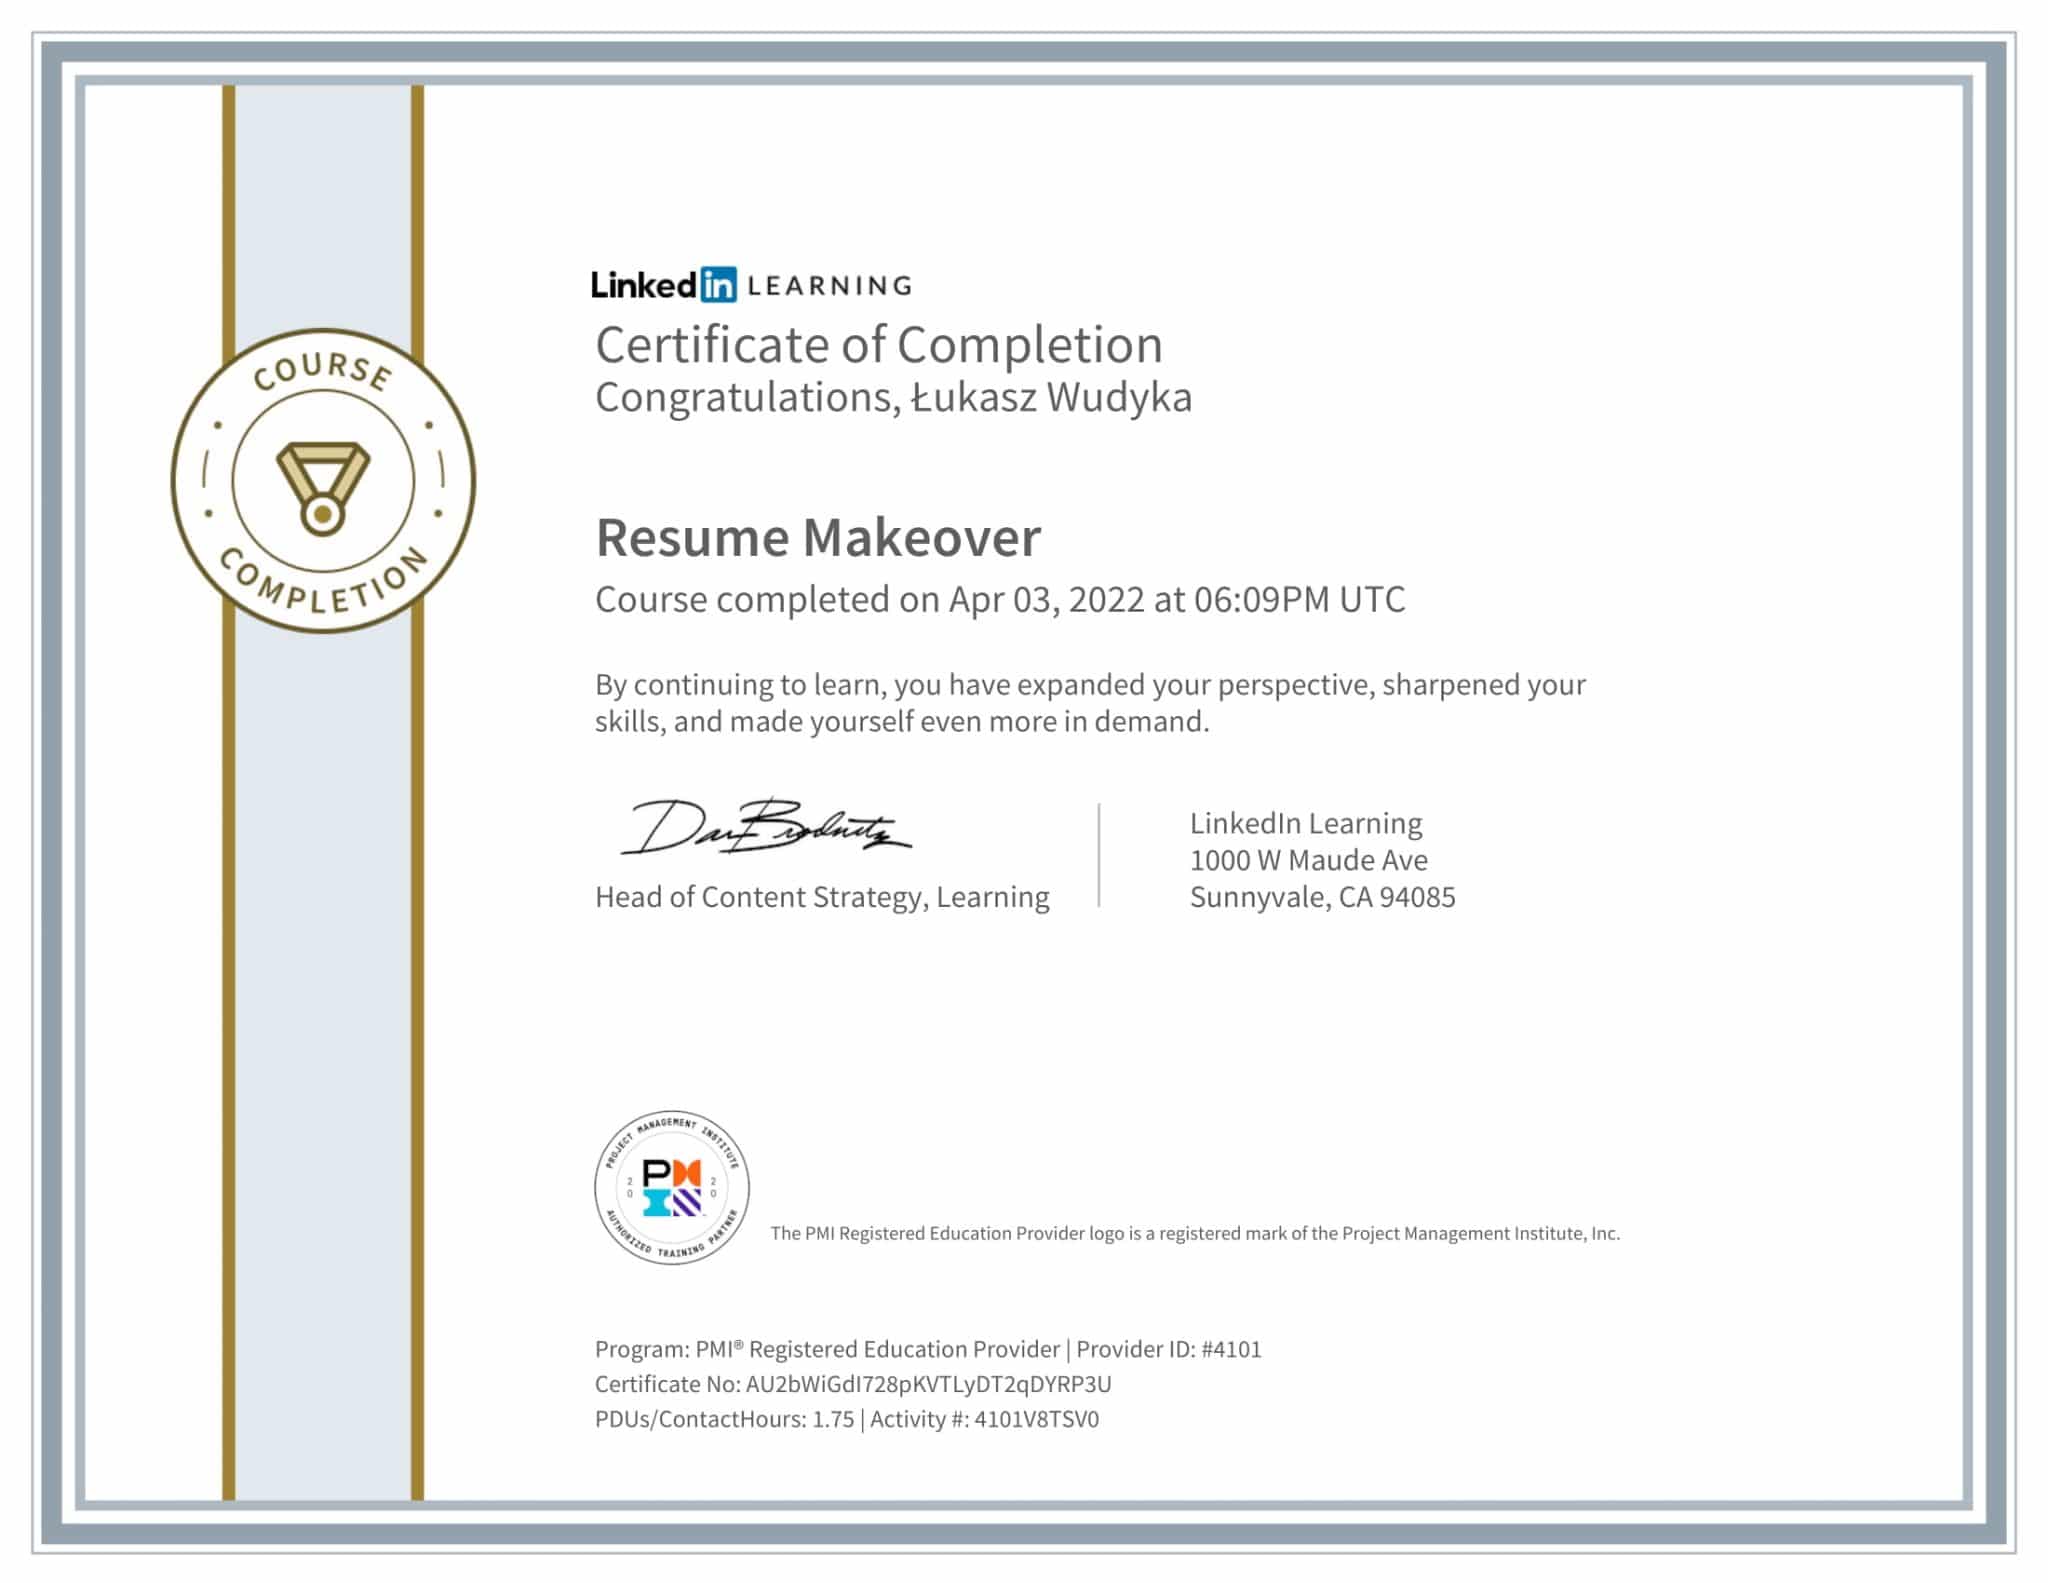 CertificateOfCompletion_Resume Makeover-1